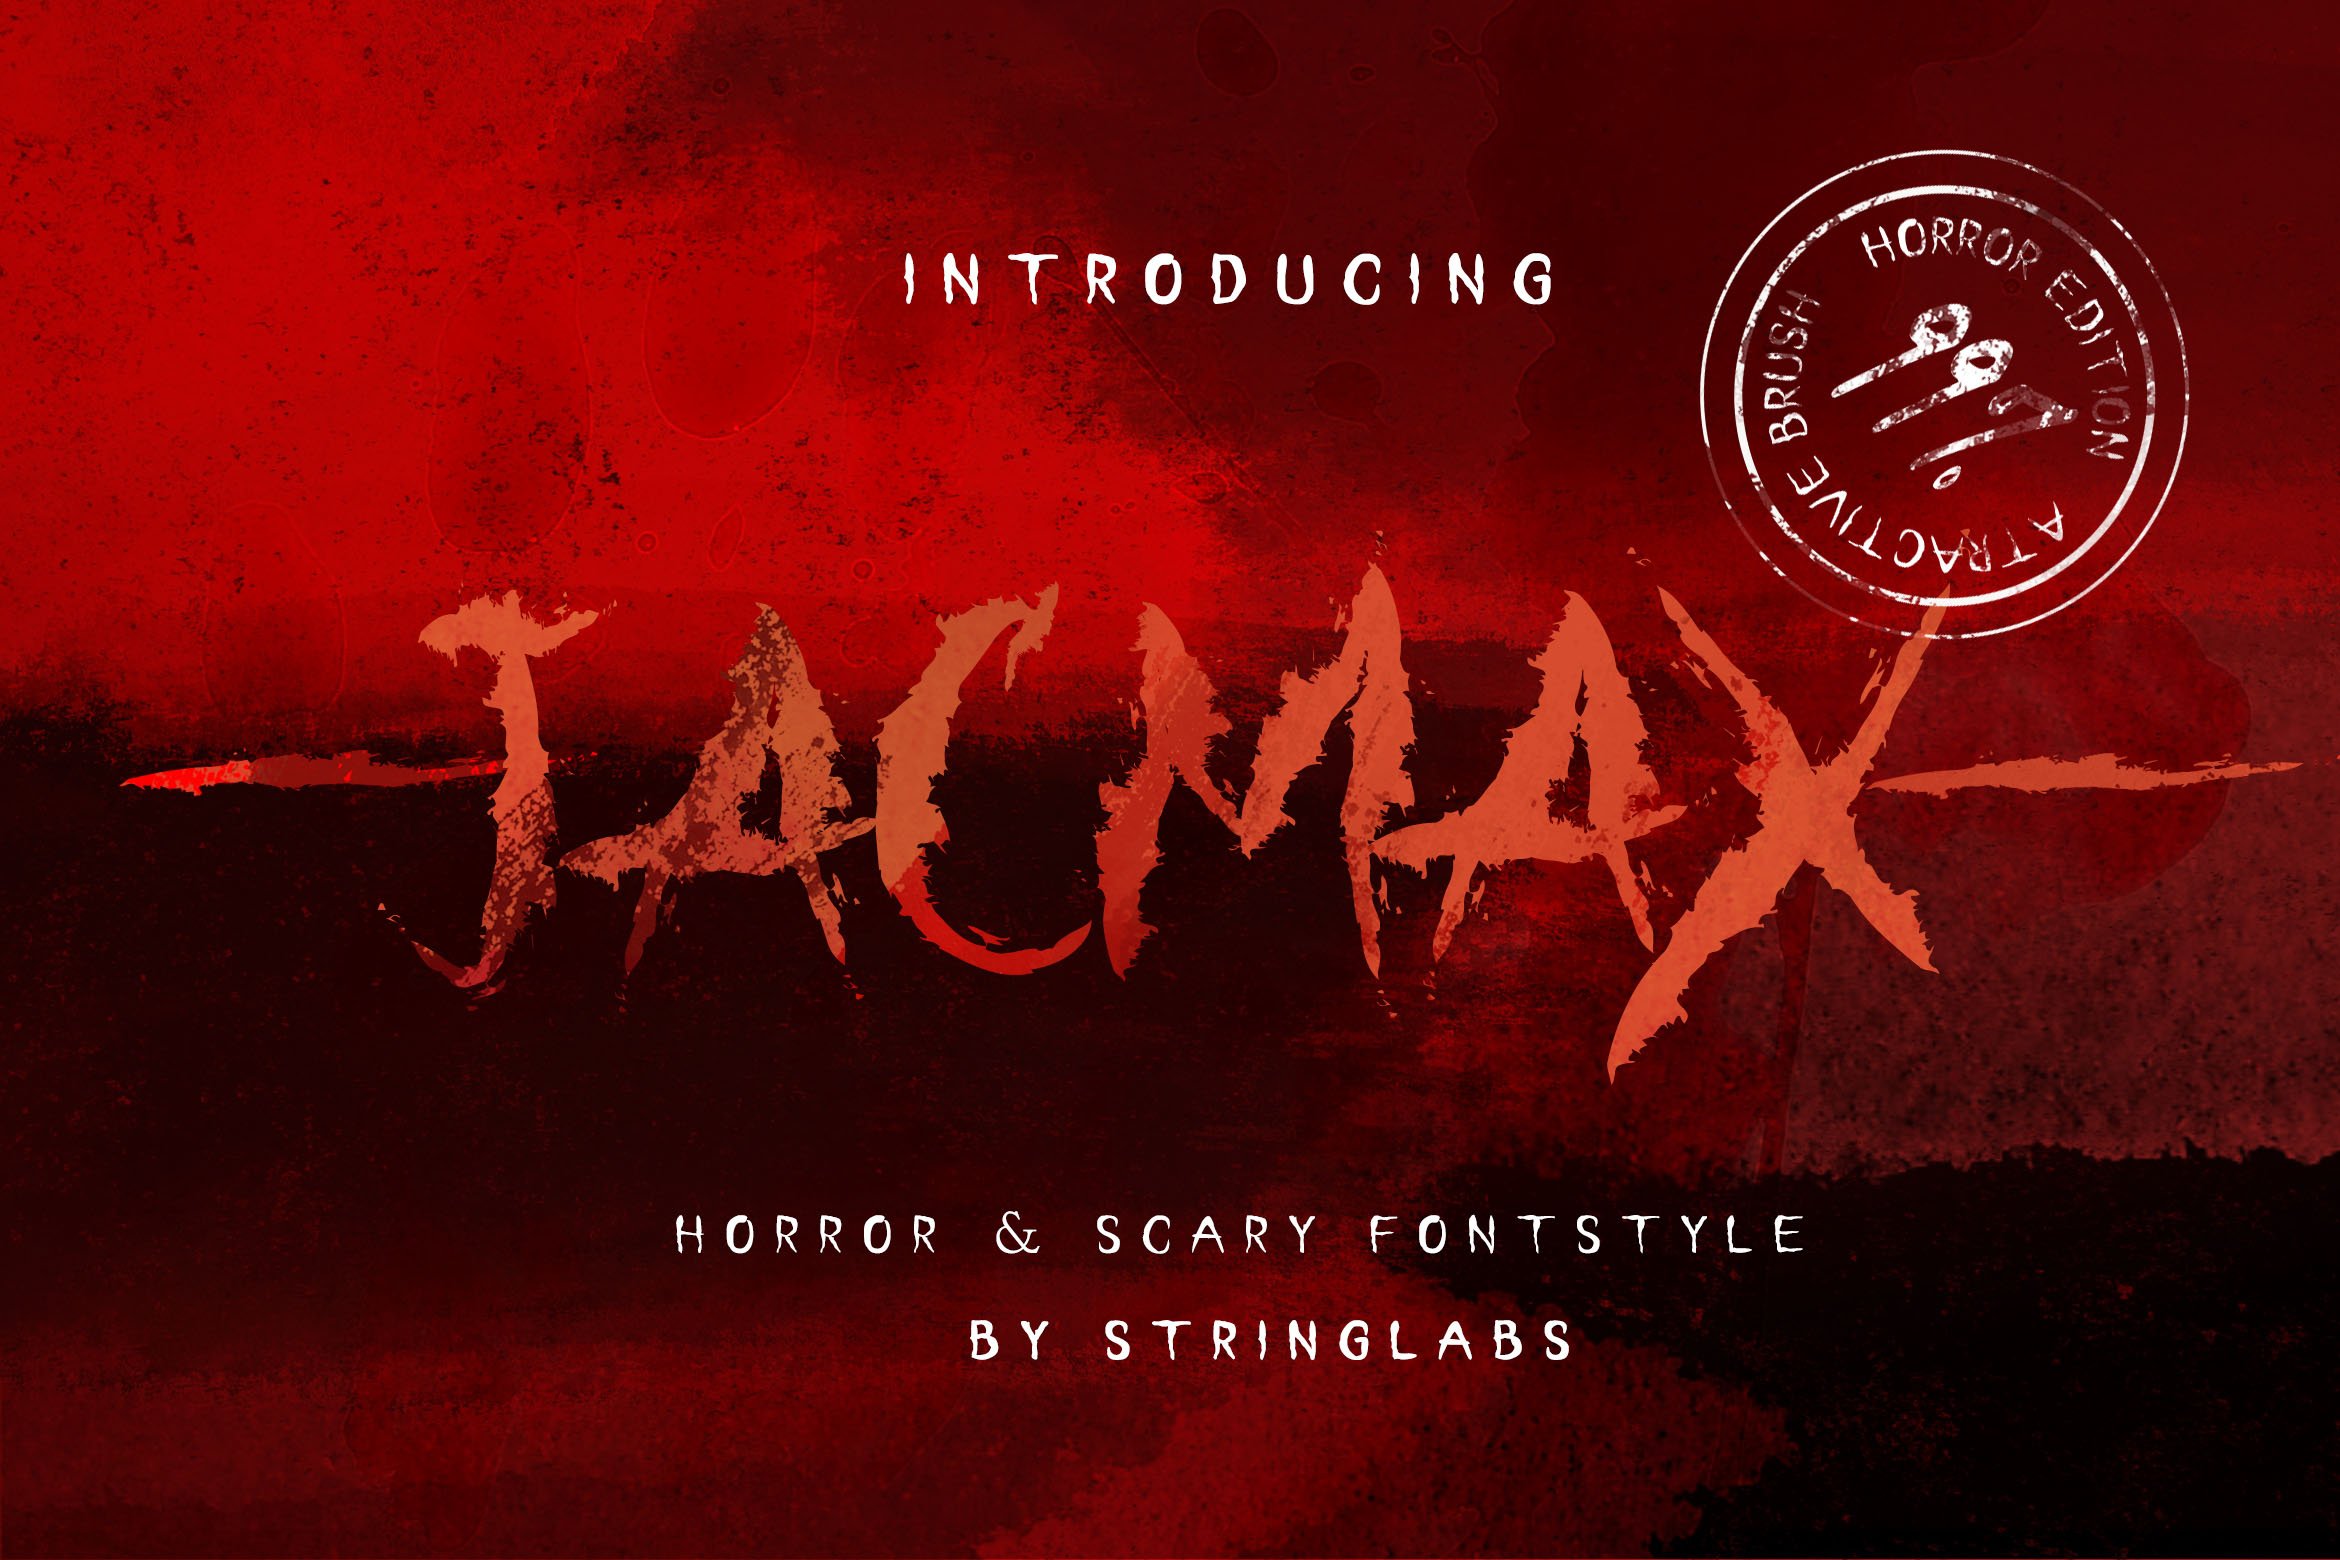 Jacmax - Horror Font cover image.